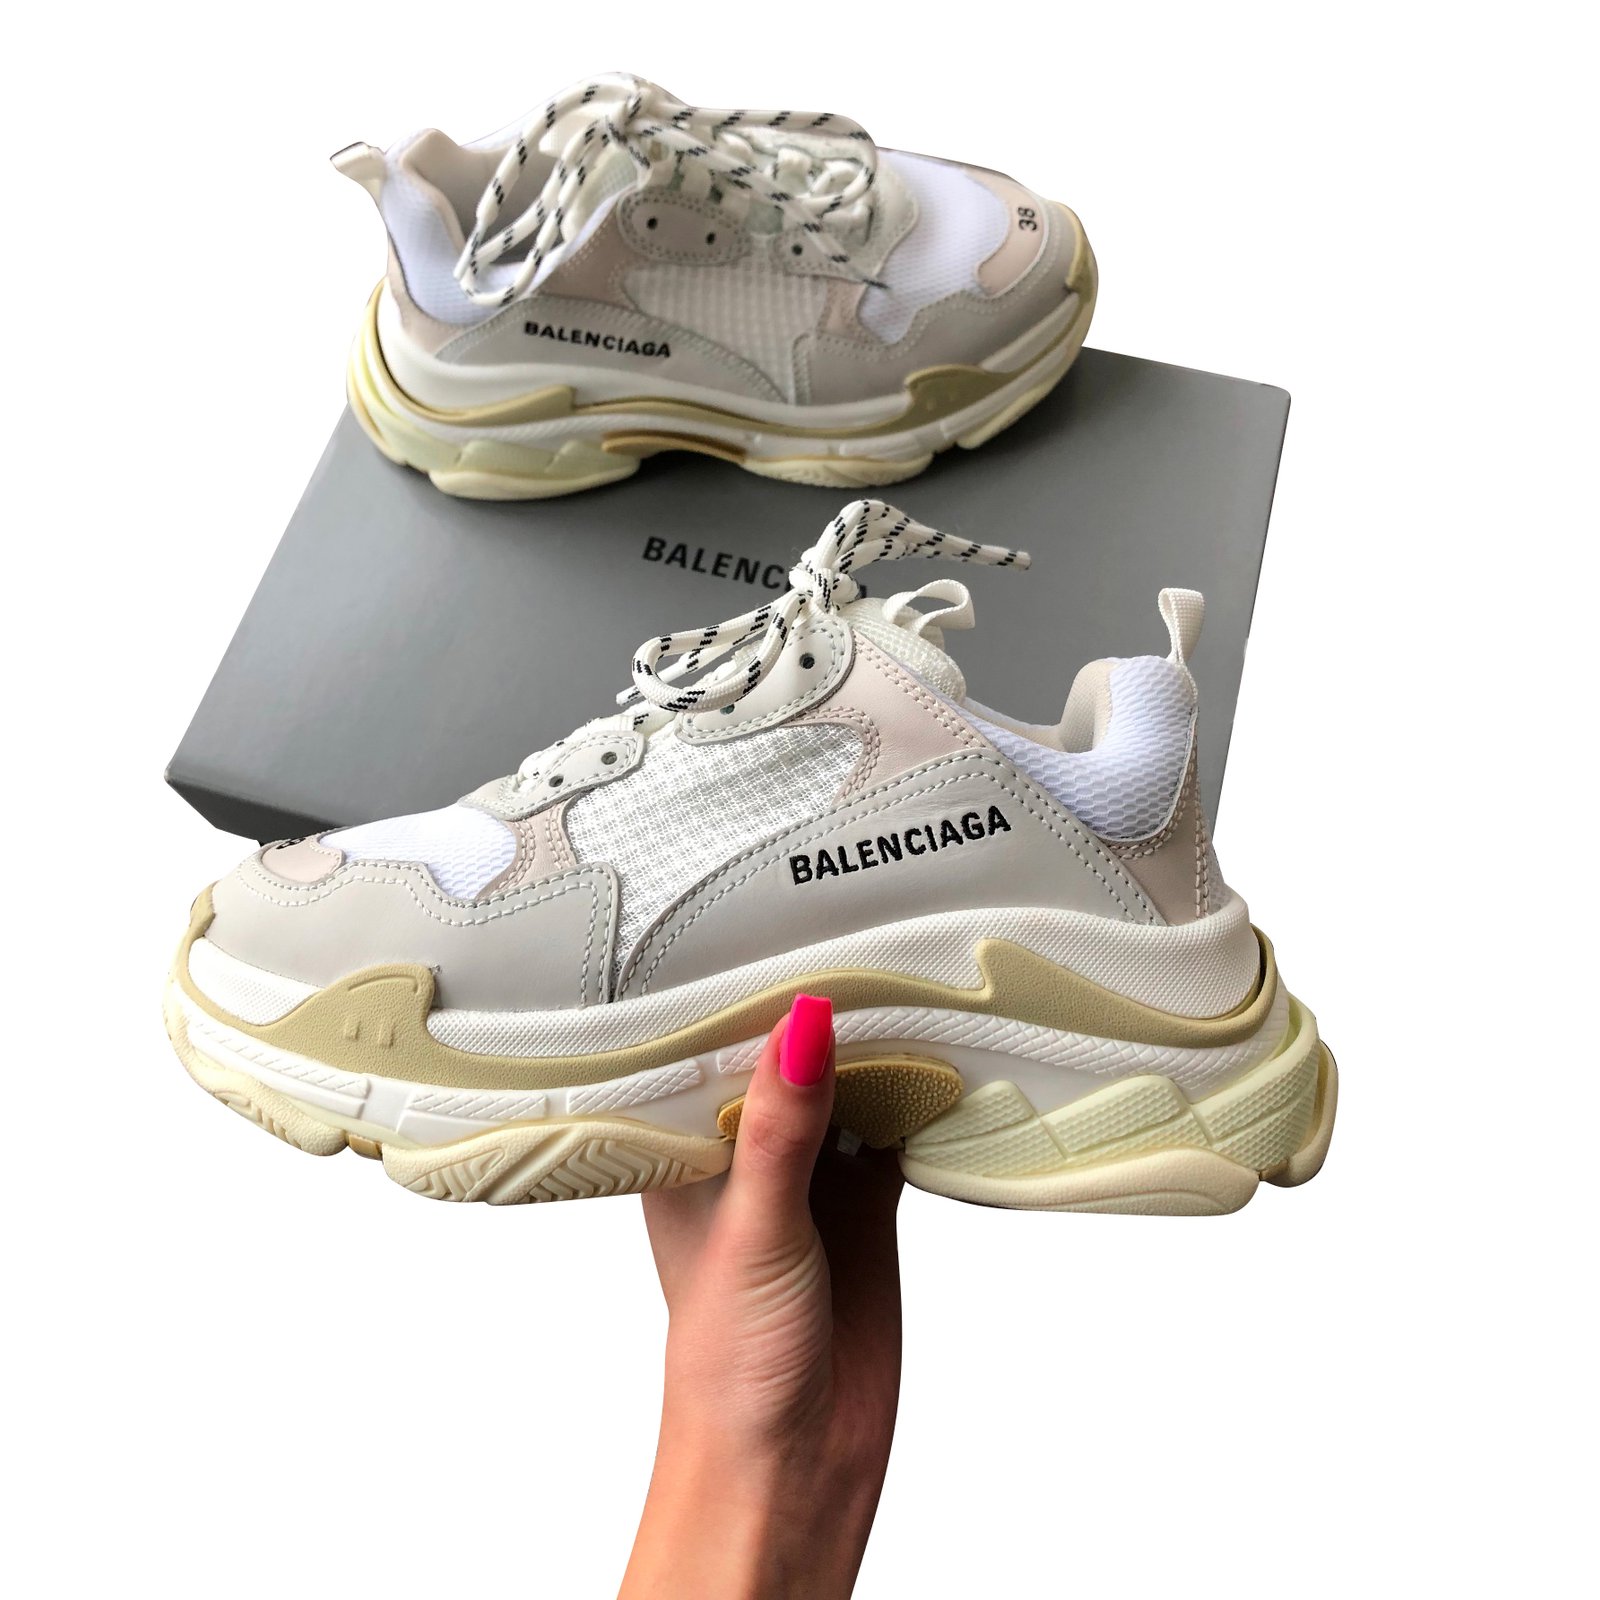 Balenciaga s Triple S Half Half Sneaker Adds Up To Make